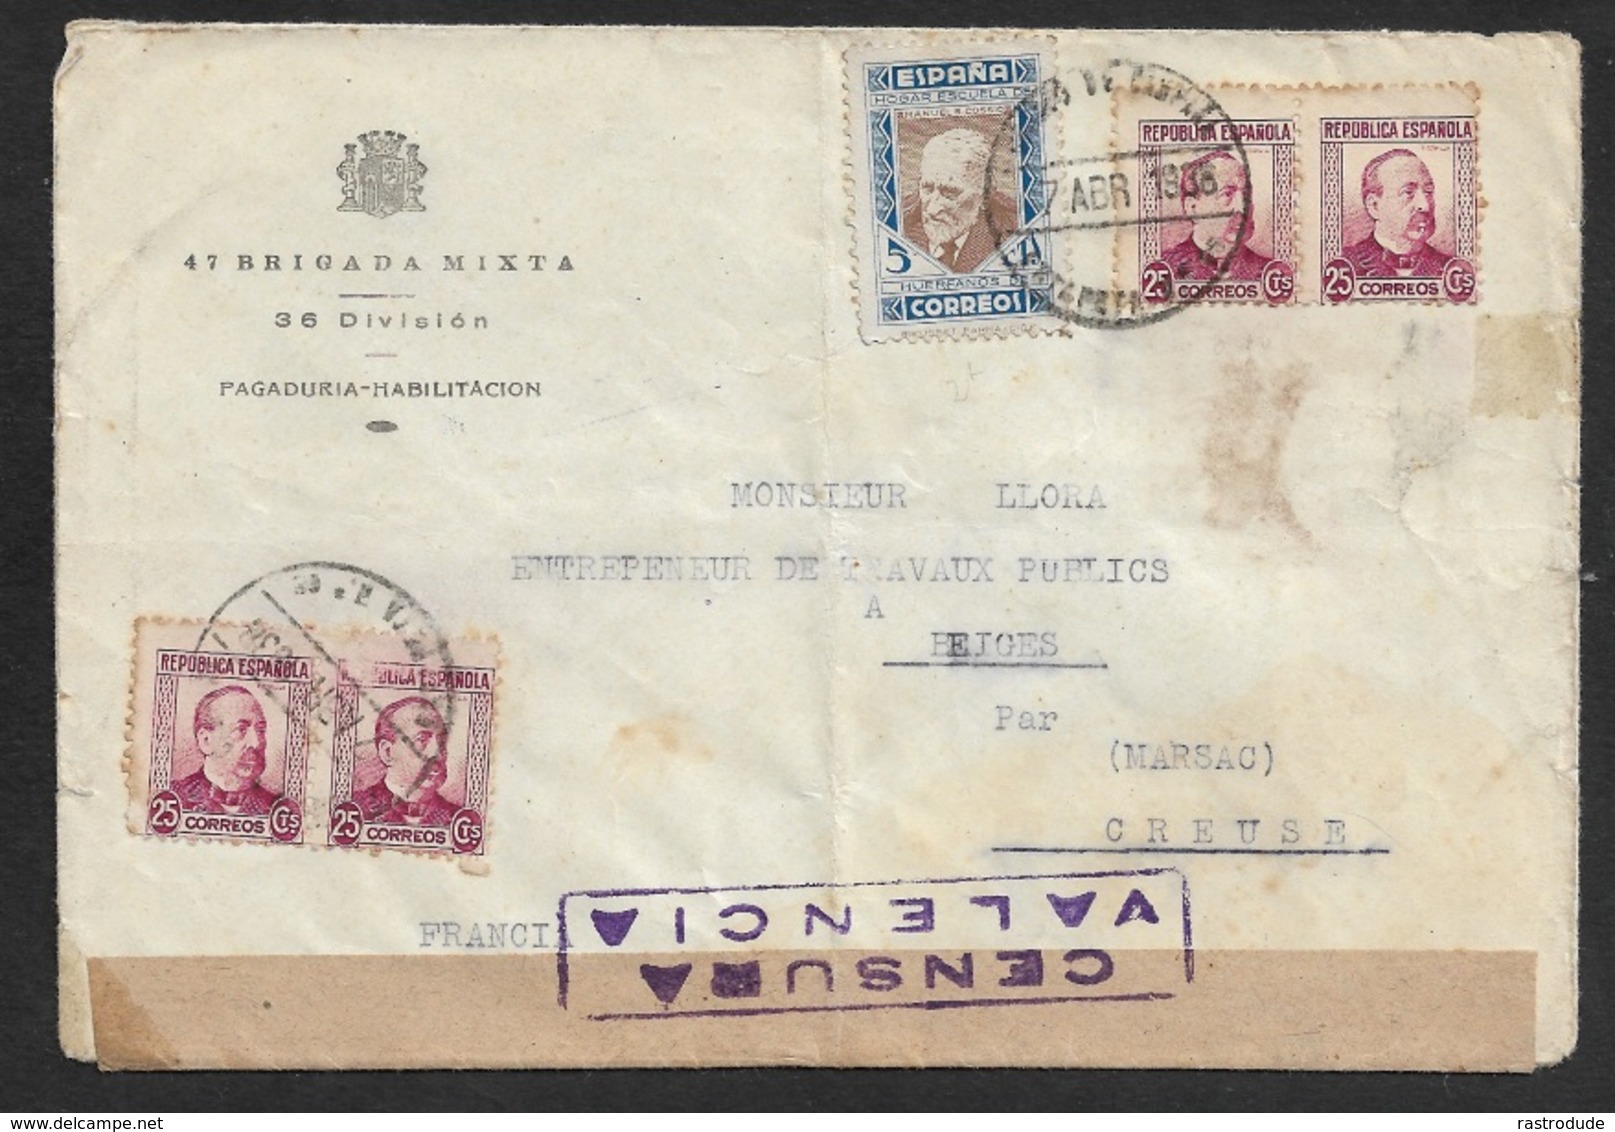 ESPAGNE SPAIN 1938 - Carta 47 BRIGADA MIXTA - CORREO DE CAMPAÑA ESTAFETA 65 - 4 X 25c Ed. 685, A FRANCIA - Covers & Documents